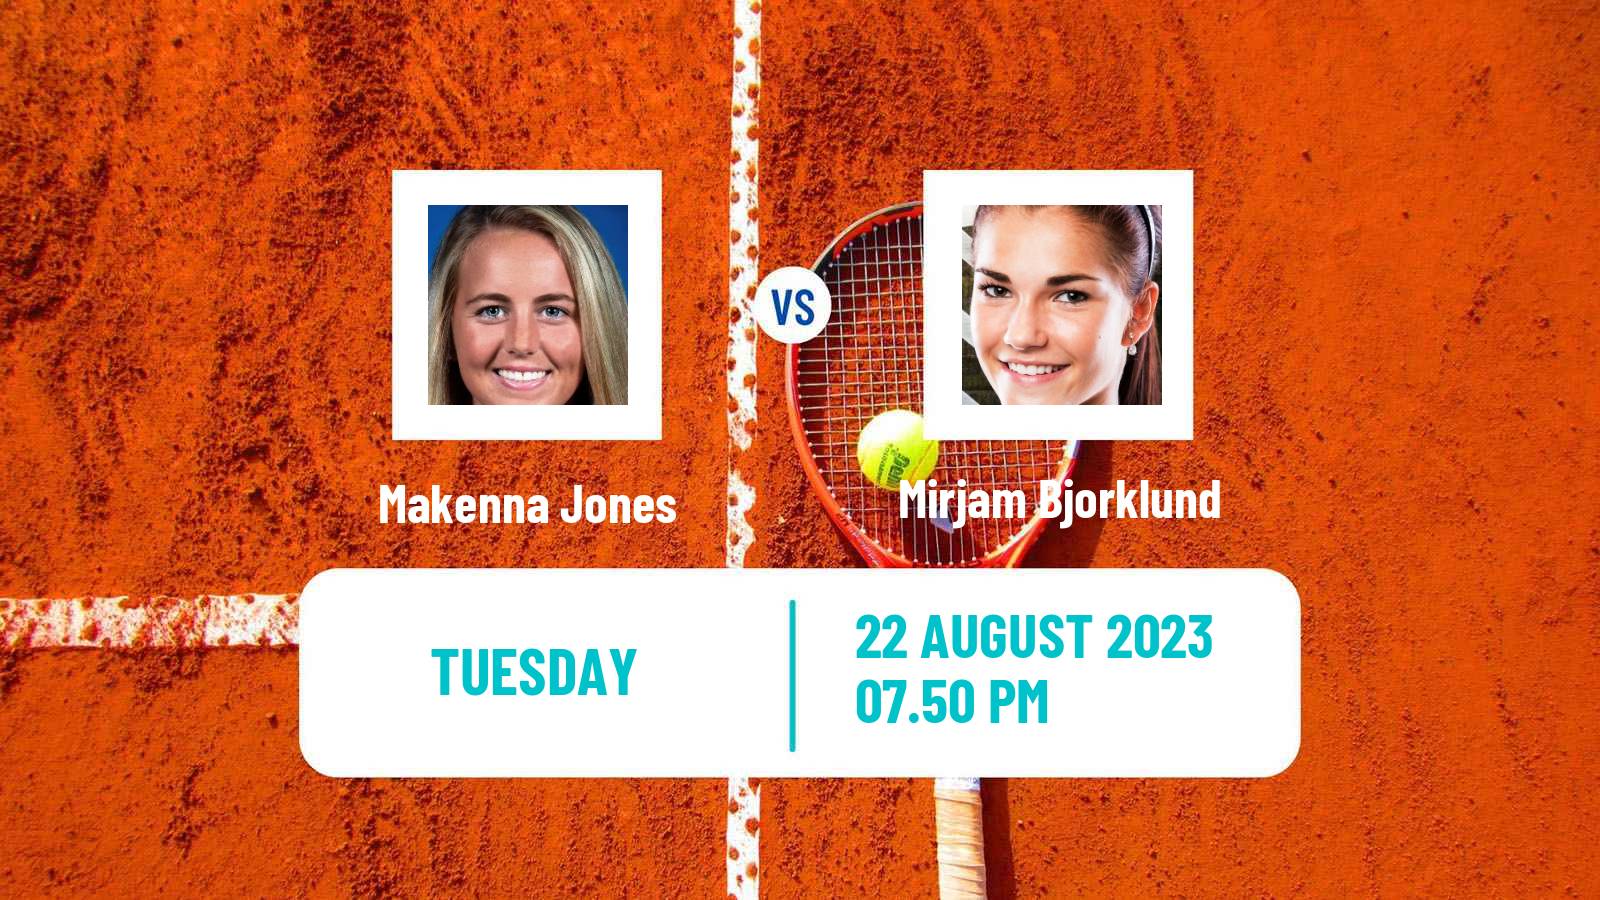 Tennis WTA US Open Makenna Jones - Mirjam Bjorklund